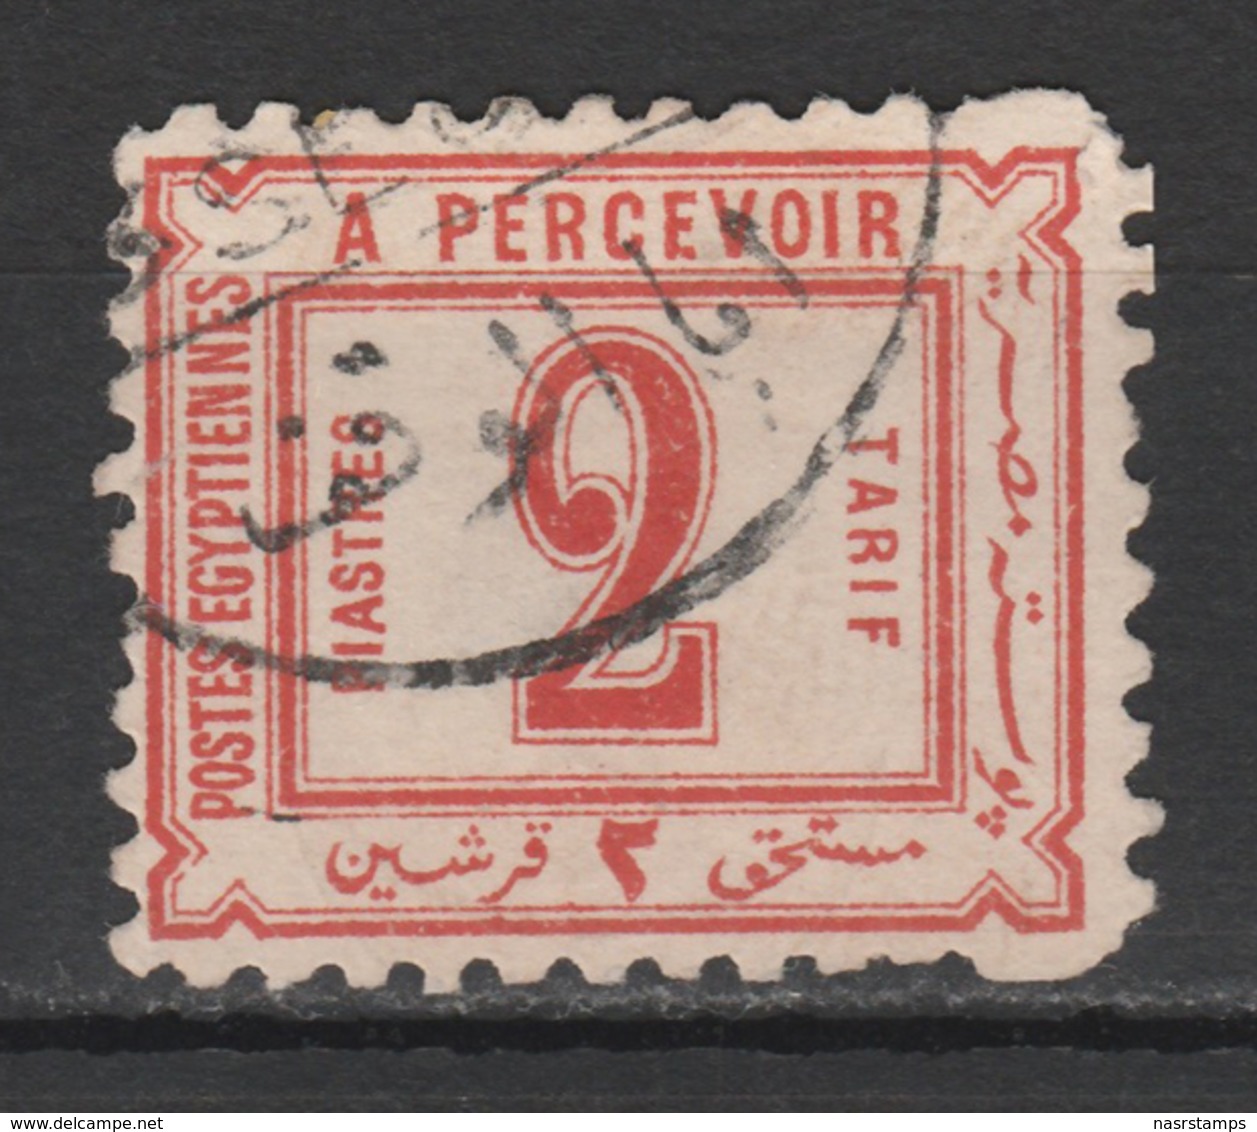 Egypt - 1884 - GENUINE - ( Postage Due - 2 Pi ) Used - 1866-1914 Khedivate Of Egypt